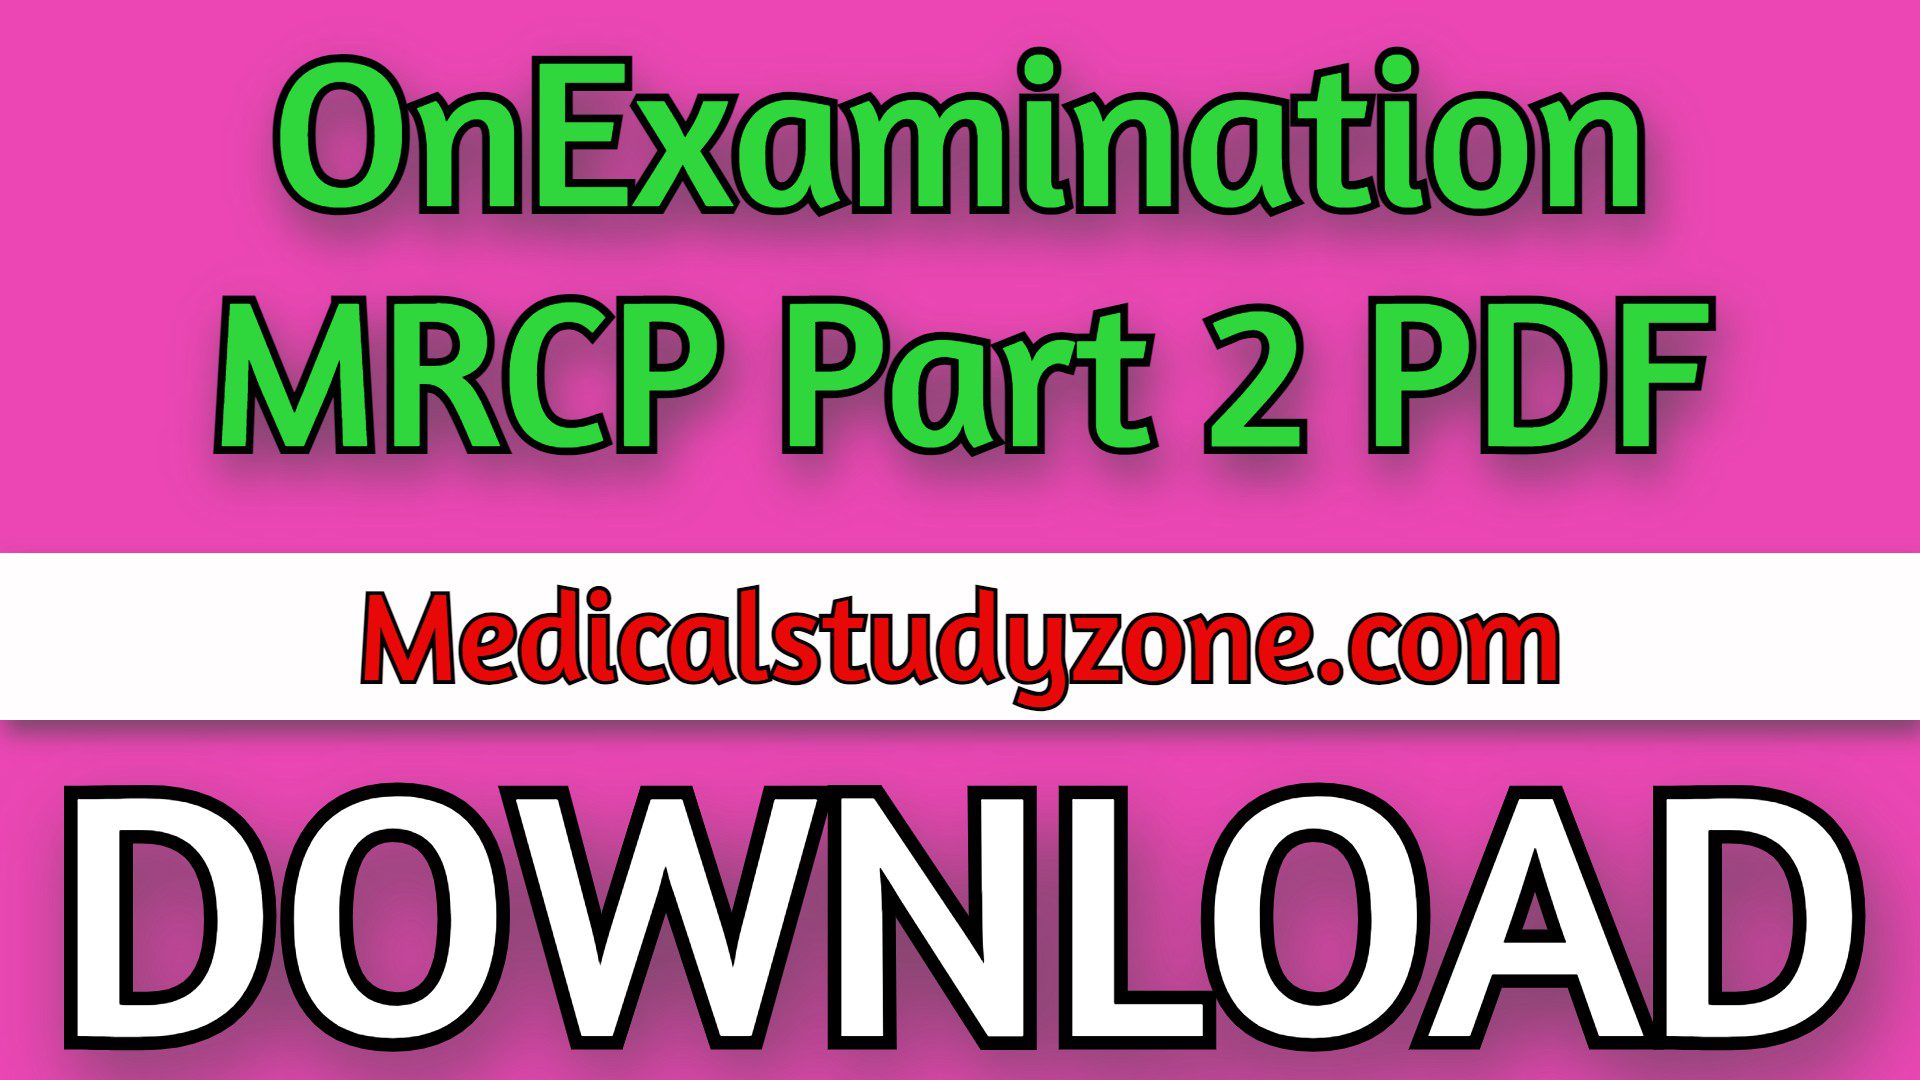 OnExamination MRCP Part 2 PDF 2021 Free Download